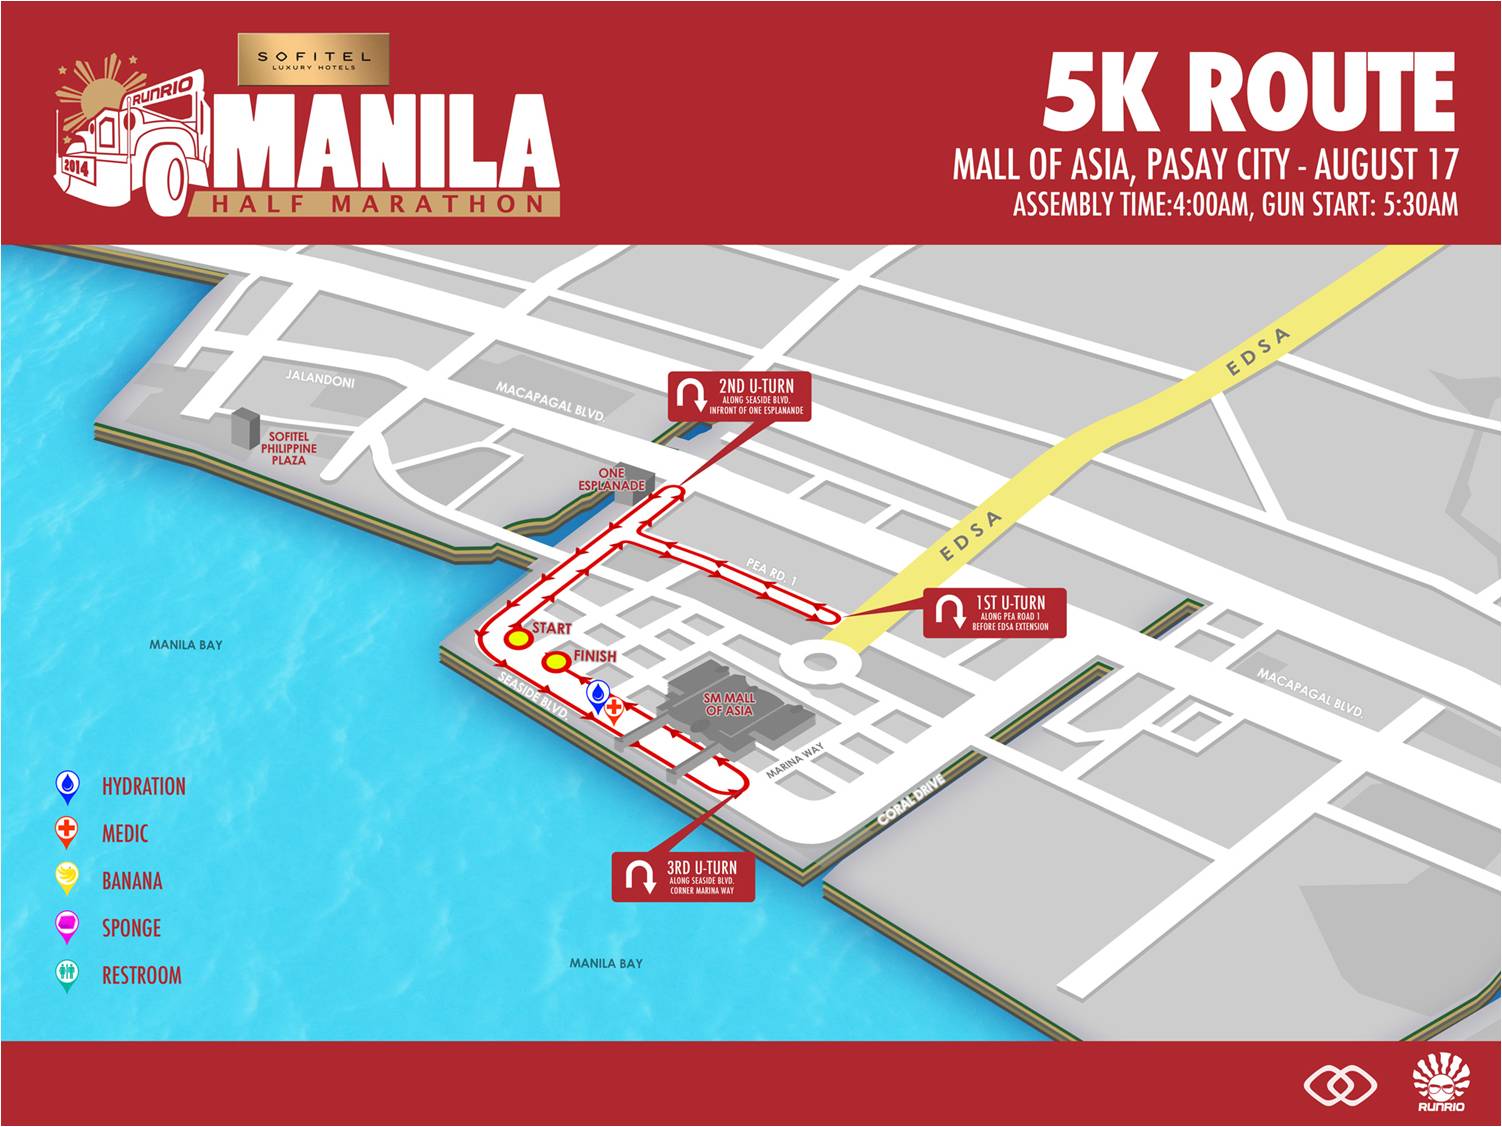 Sofitel Manila Half Marathon 5k route